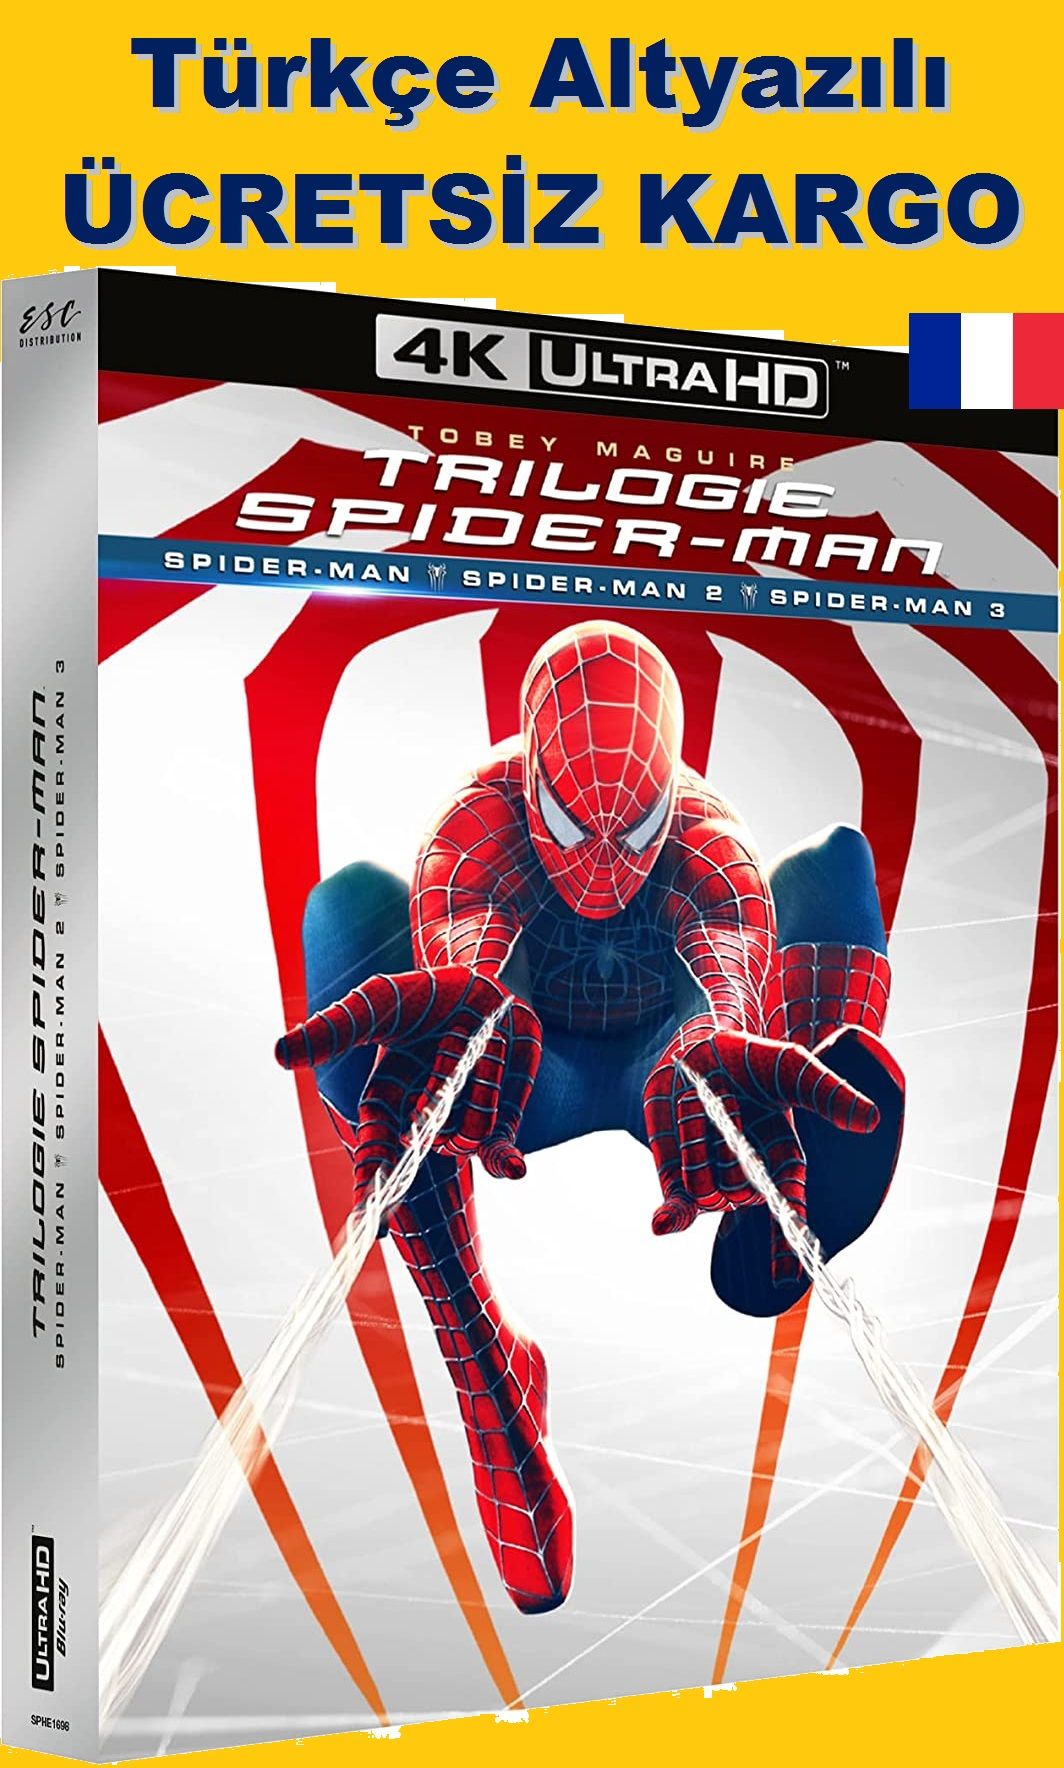 Spider Man Trilogy Tobey Maguire Collection 4 UHD - Örümcek Adam Üçleme 4K UHD 3 Disk